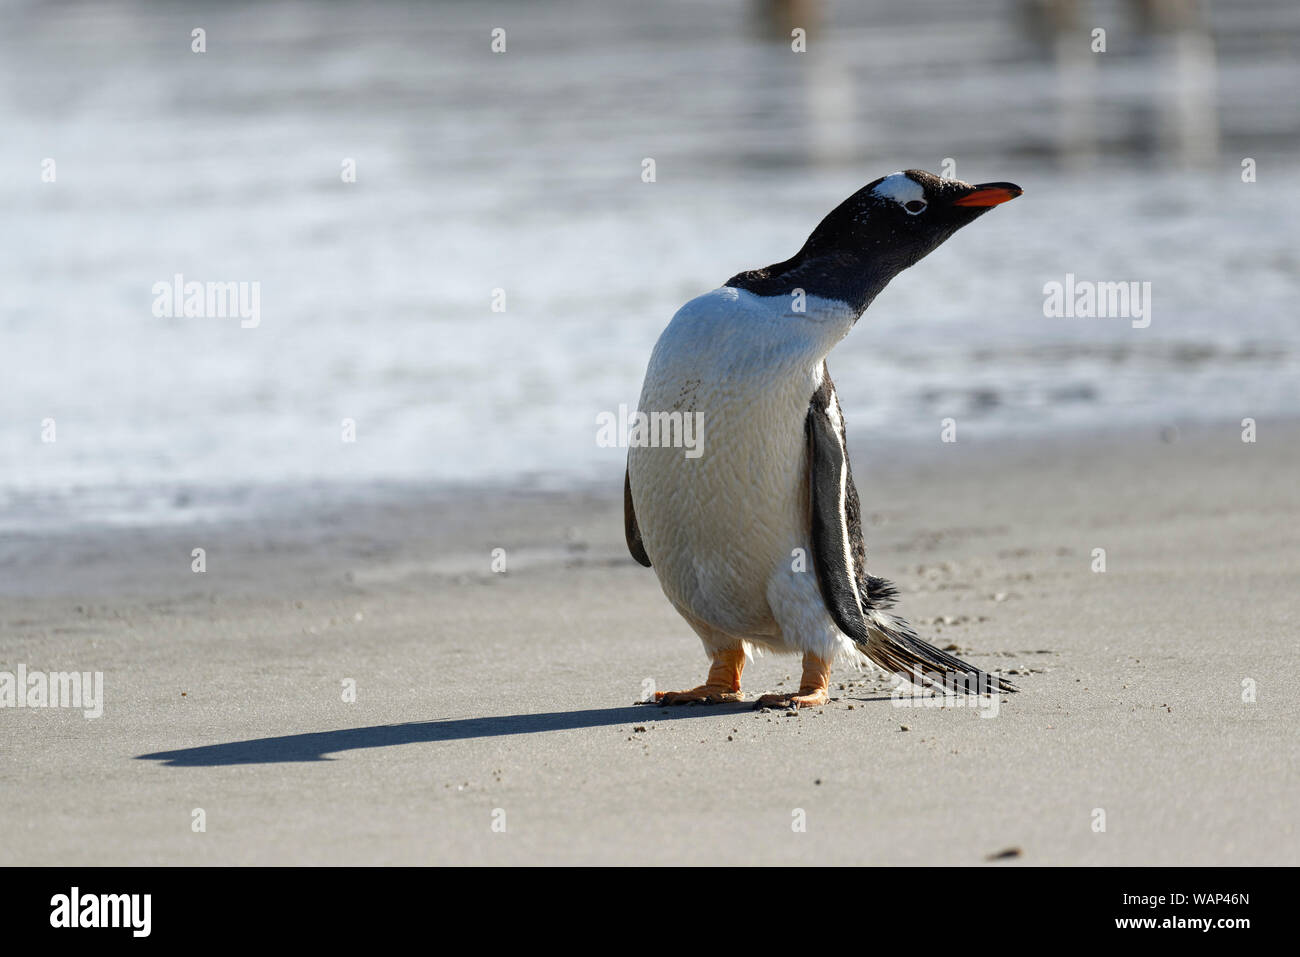 Eselspinguine (Pygoscelis papua) am Strand, Falkland Inseln. Gentoo Pinguin am Strand, Falkland Inseln Stockfoto